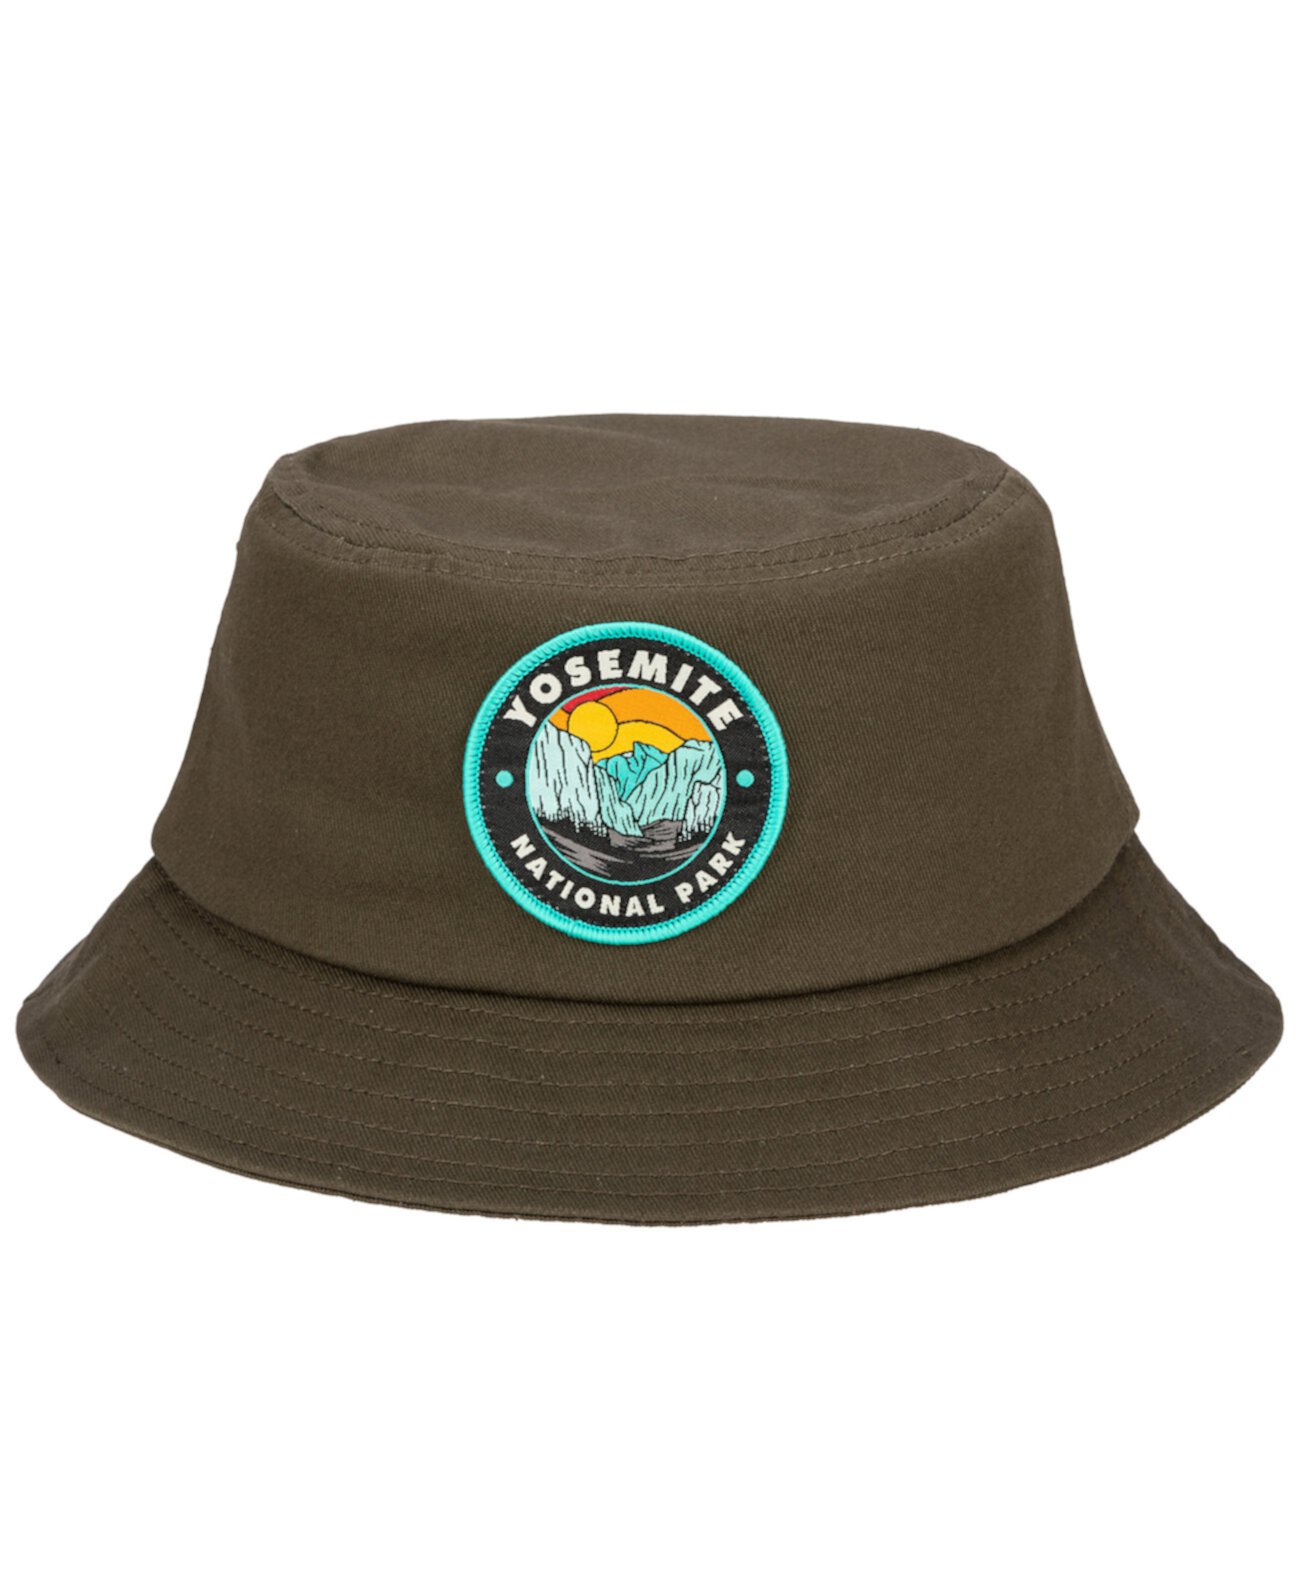 Мужская шляпа-ведро National Parks Foundation